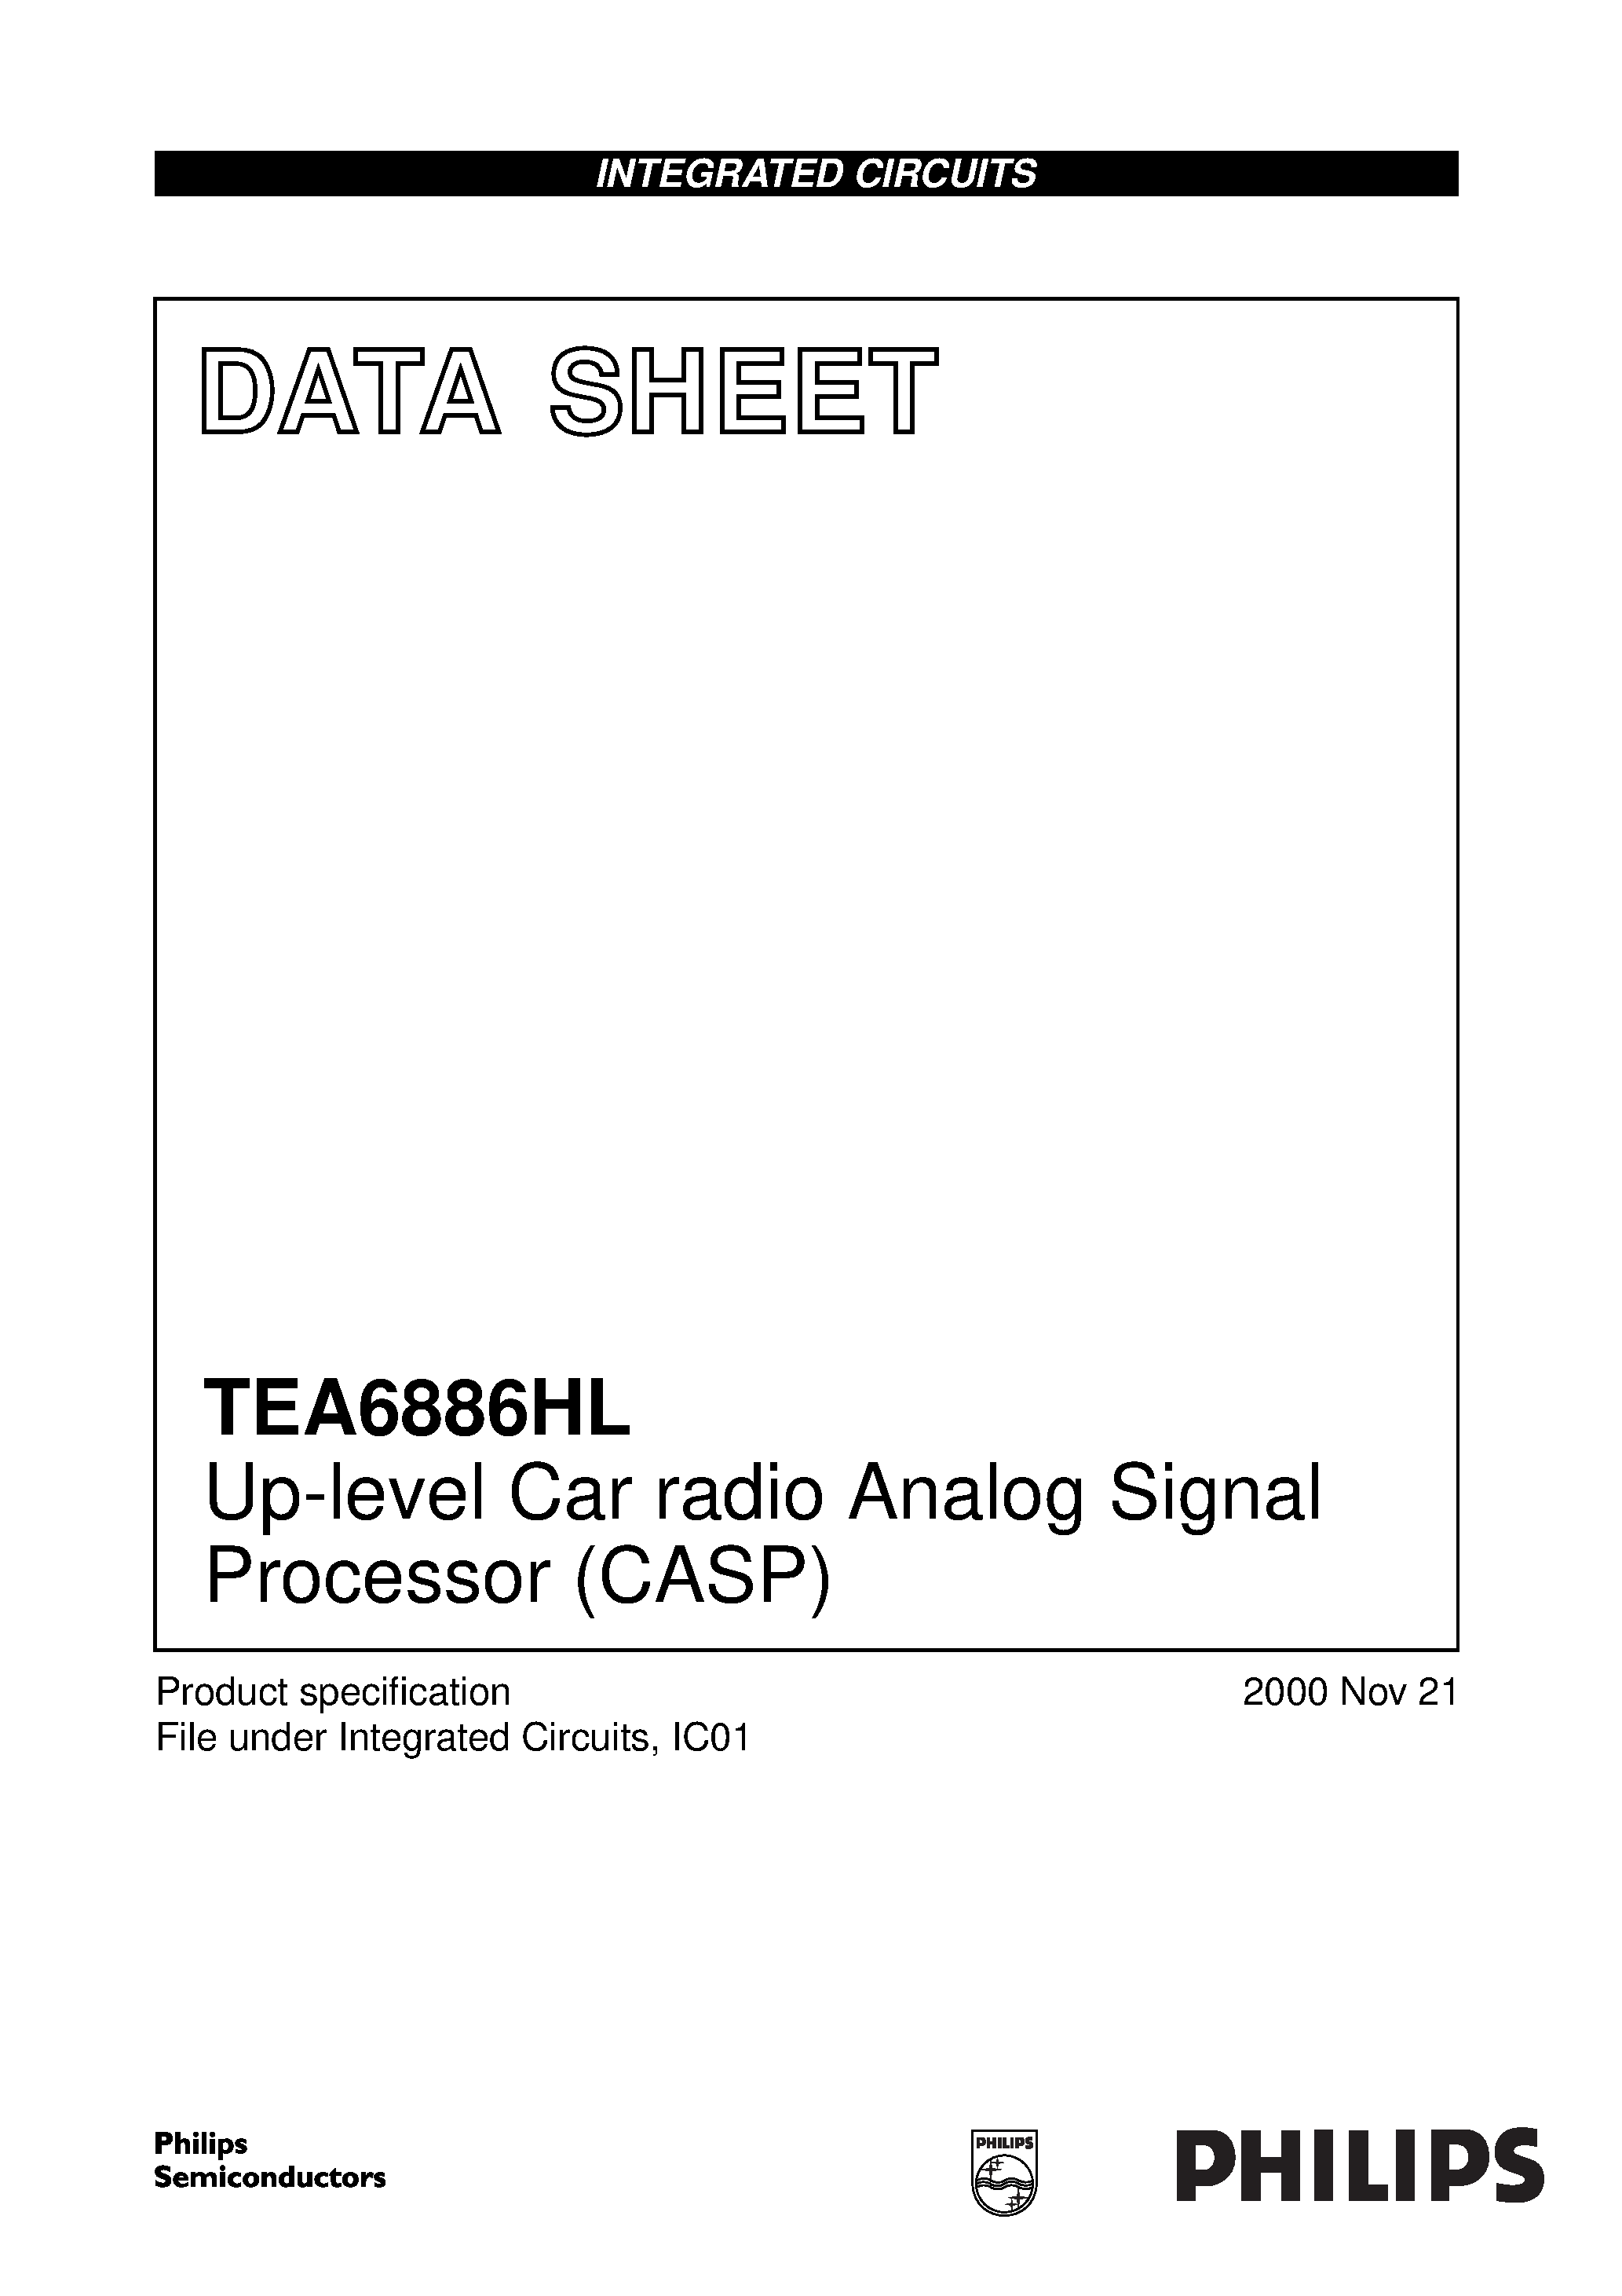 Datasheet TEA6886HL - Up-level Car radio Analog Signal Processor CASP page 1